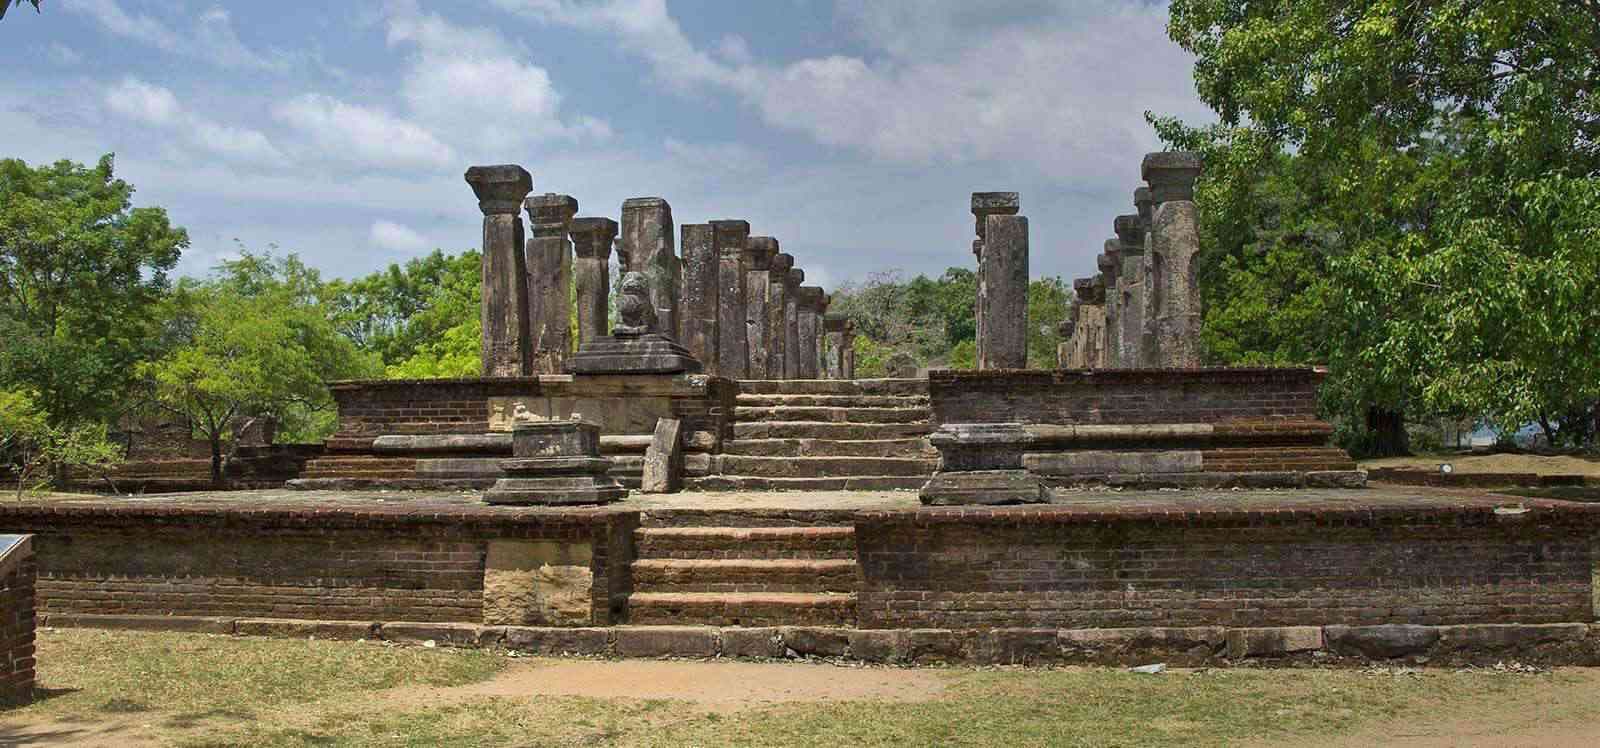 Ruins of the ancient city of the Polonnaruwa kingdom, Sri Lanka.